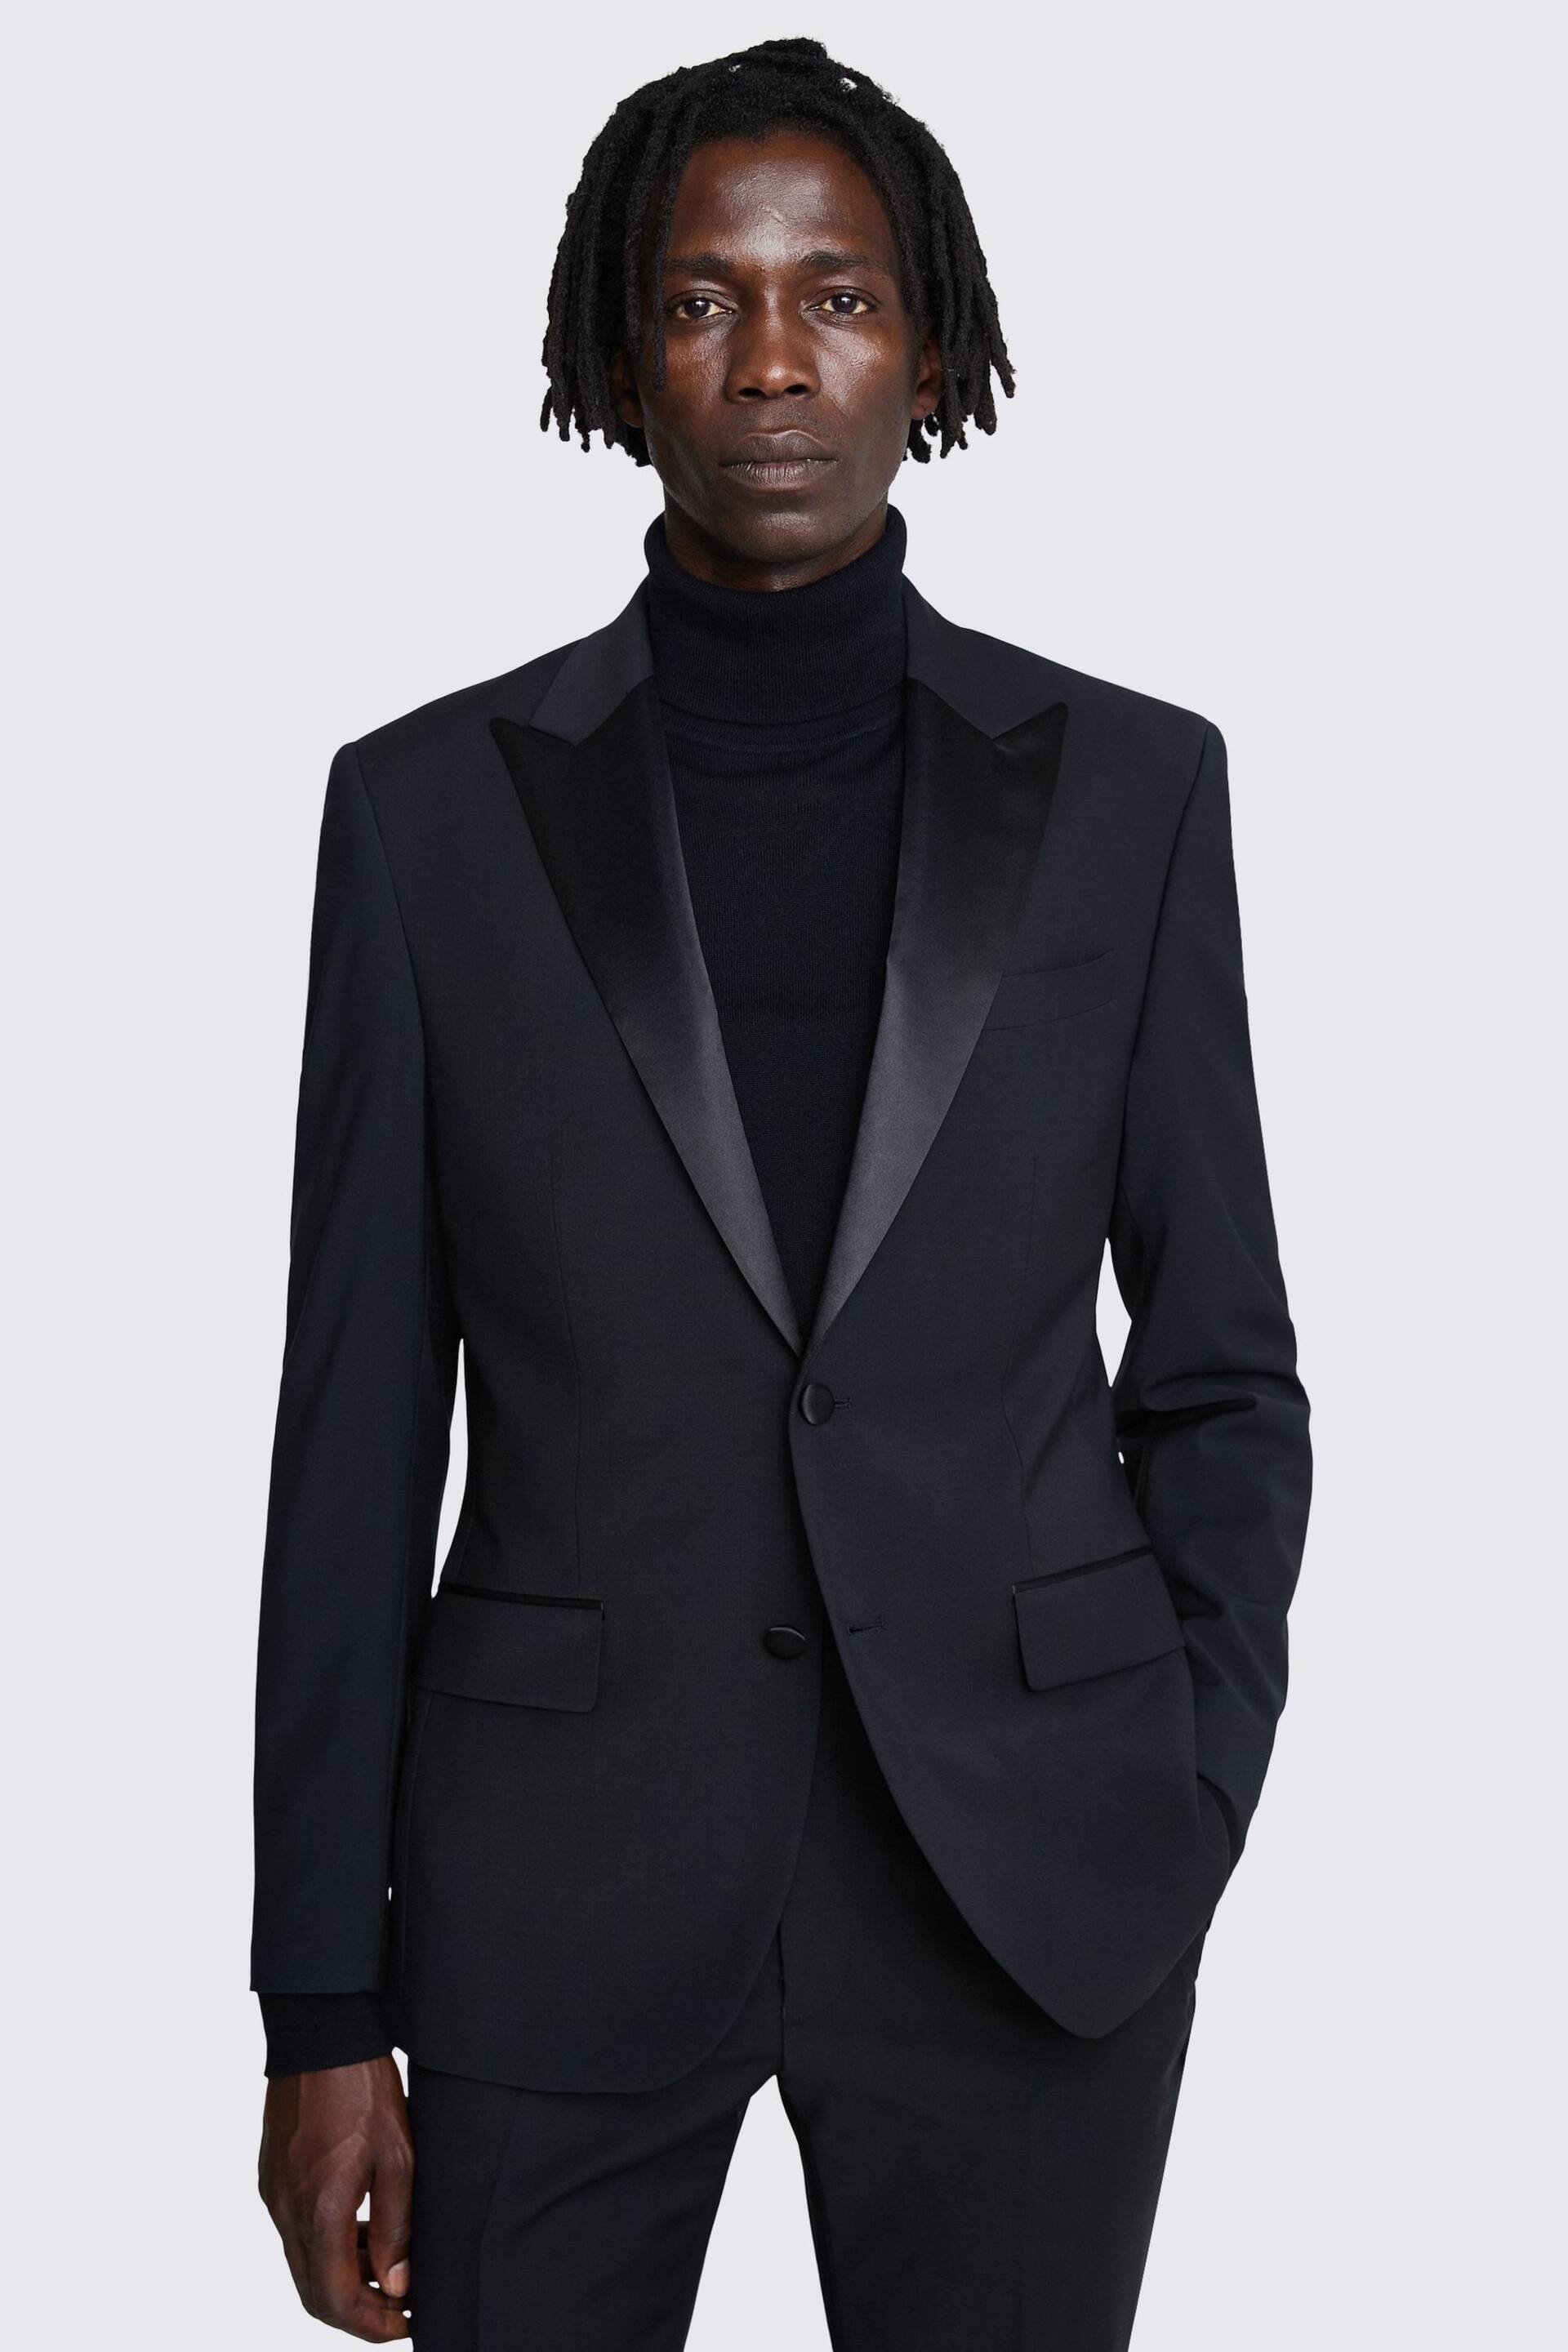 MOSS Black Tailored Fit Performance Peak Tuxedo Suit Jacket - Image 1 of 5